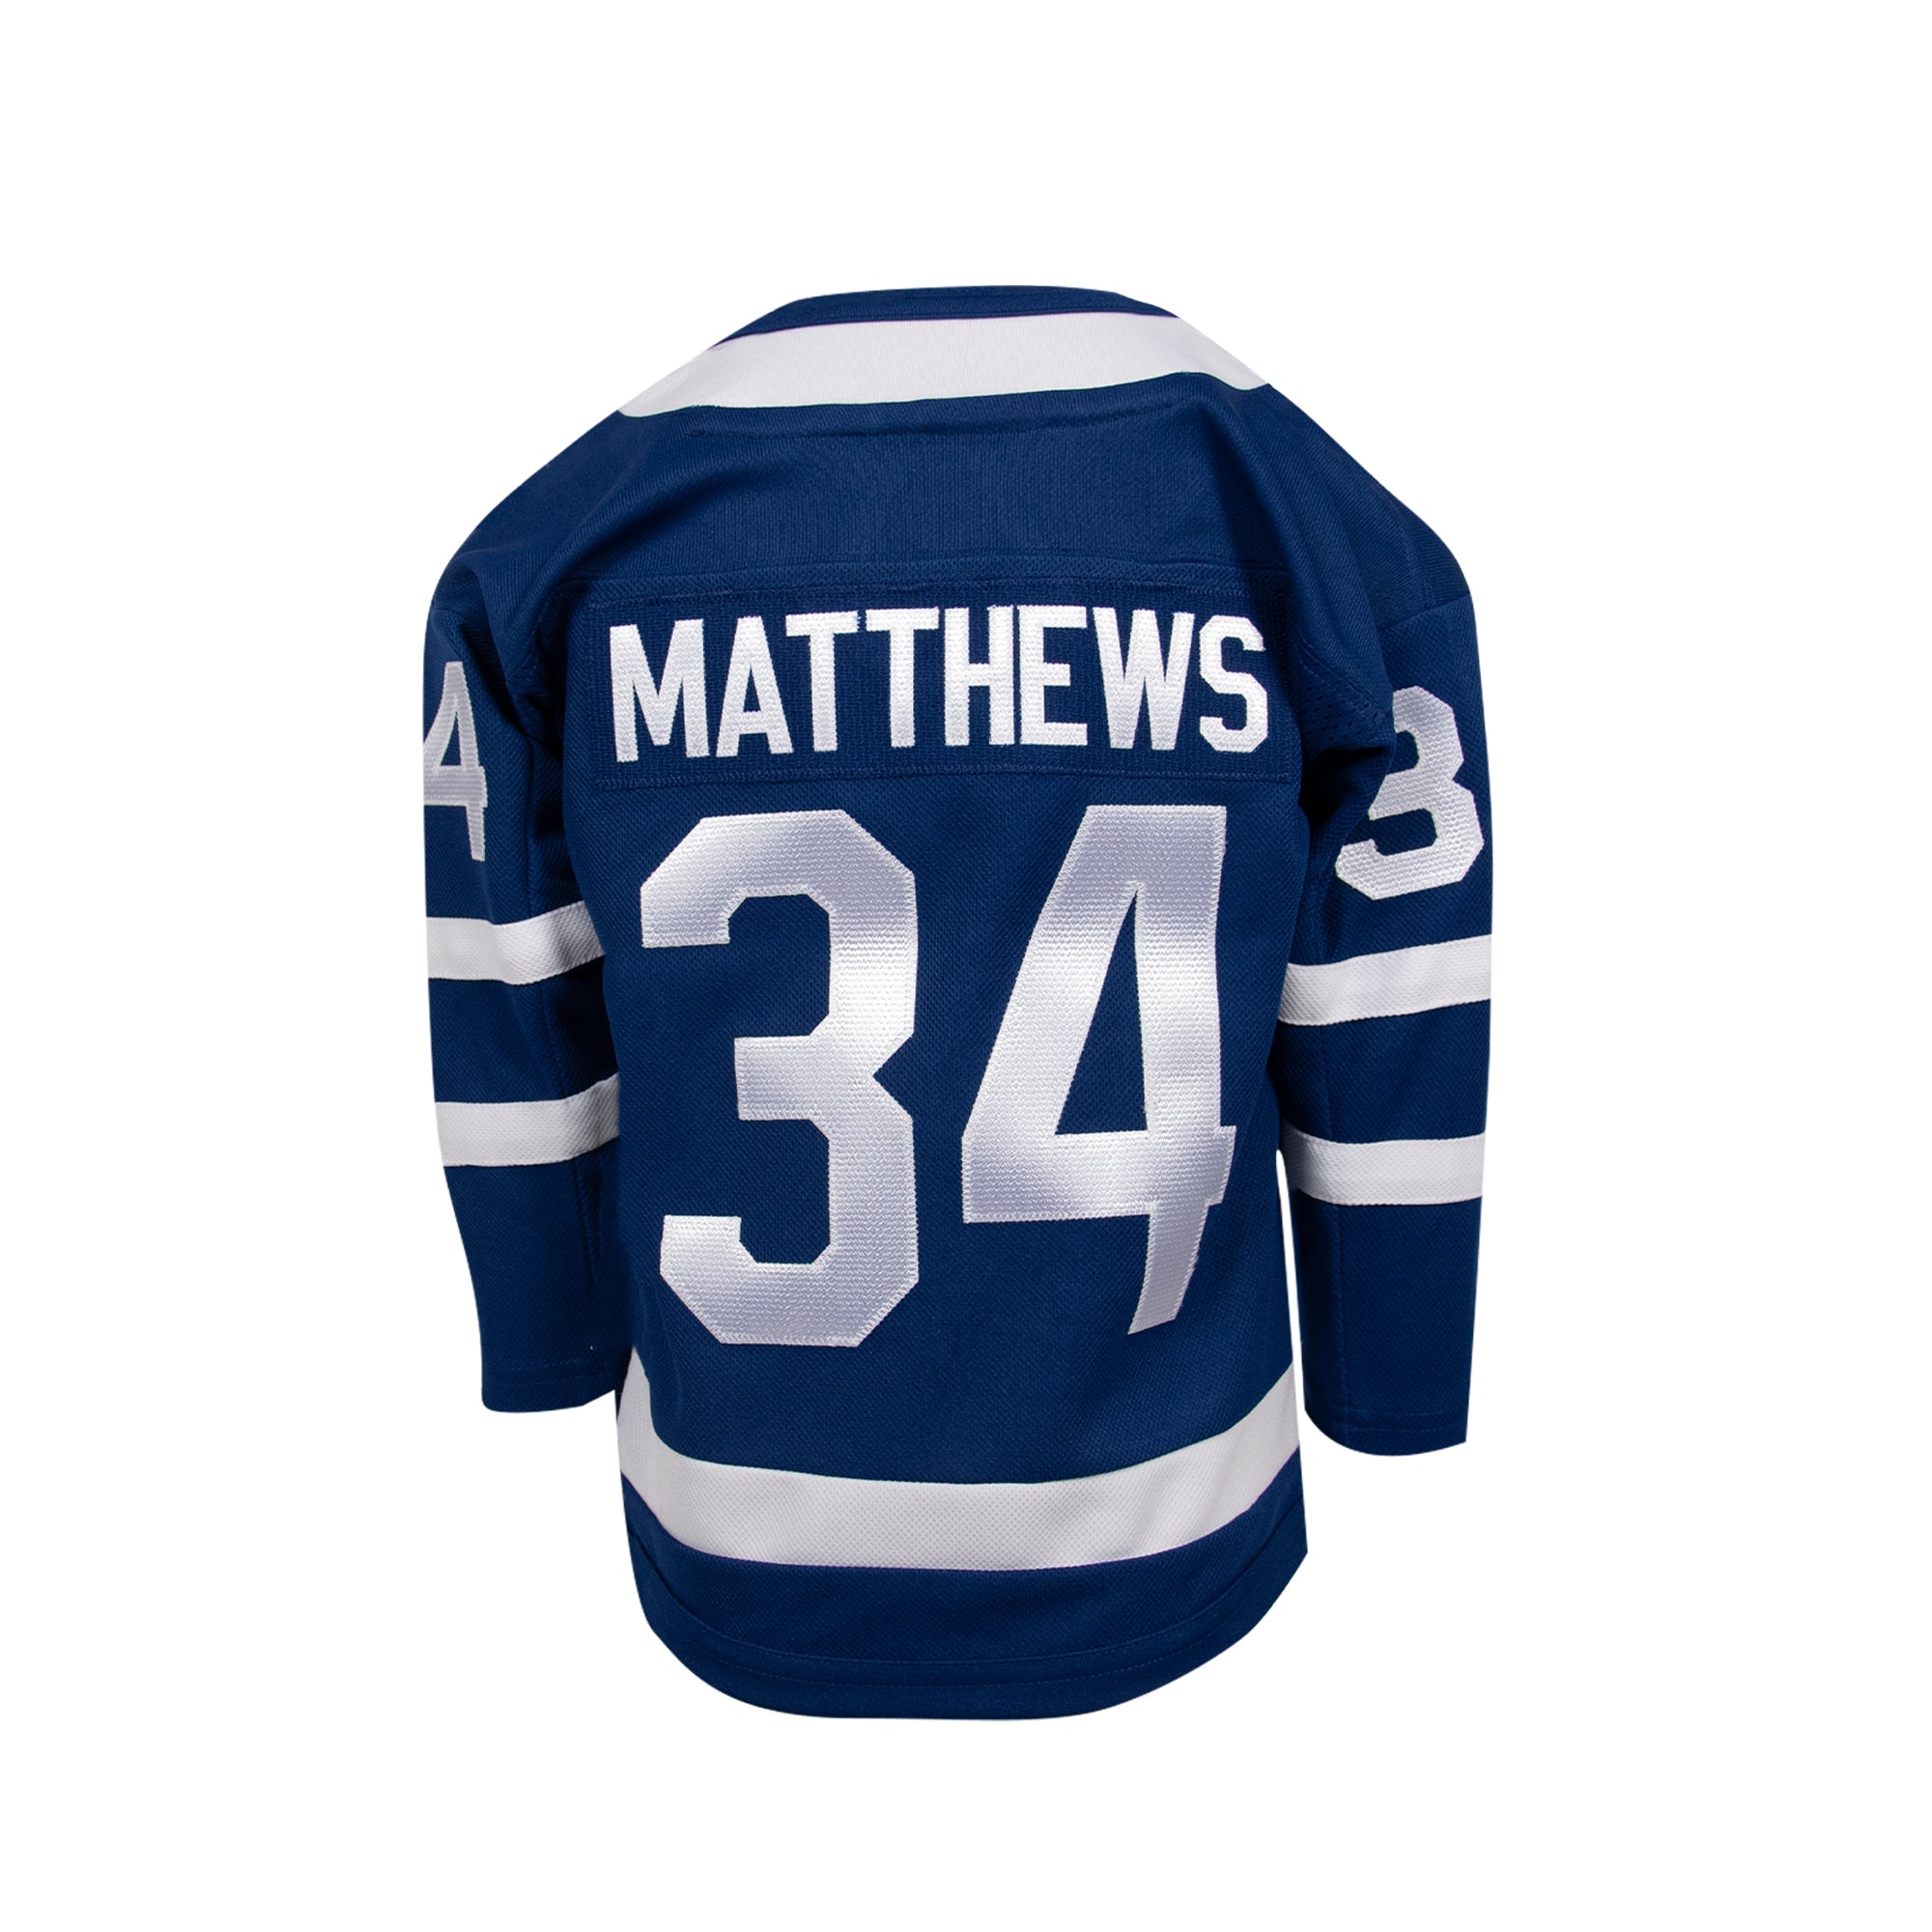 drew house, Tops, Drew House X Toronto Maple Leafs Auston Matthews Jersey